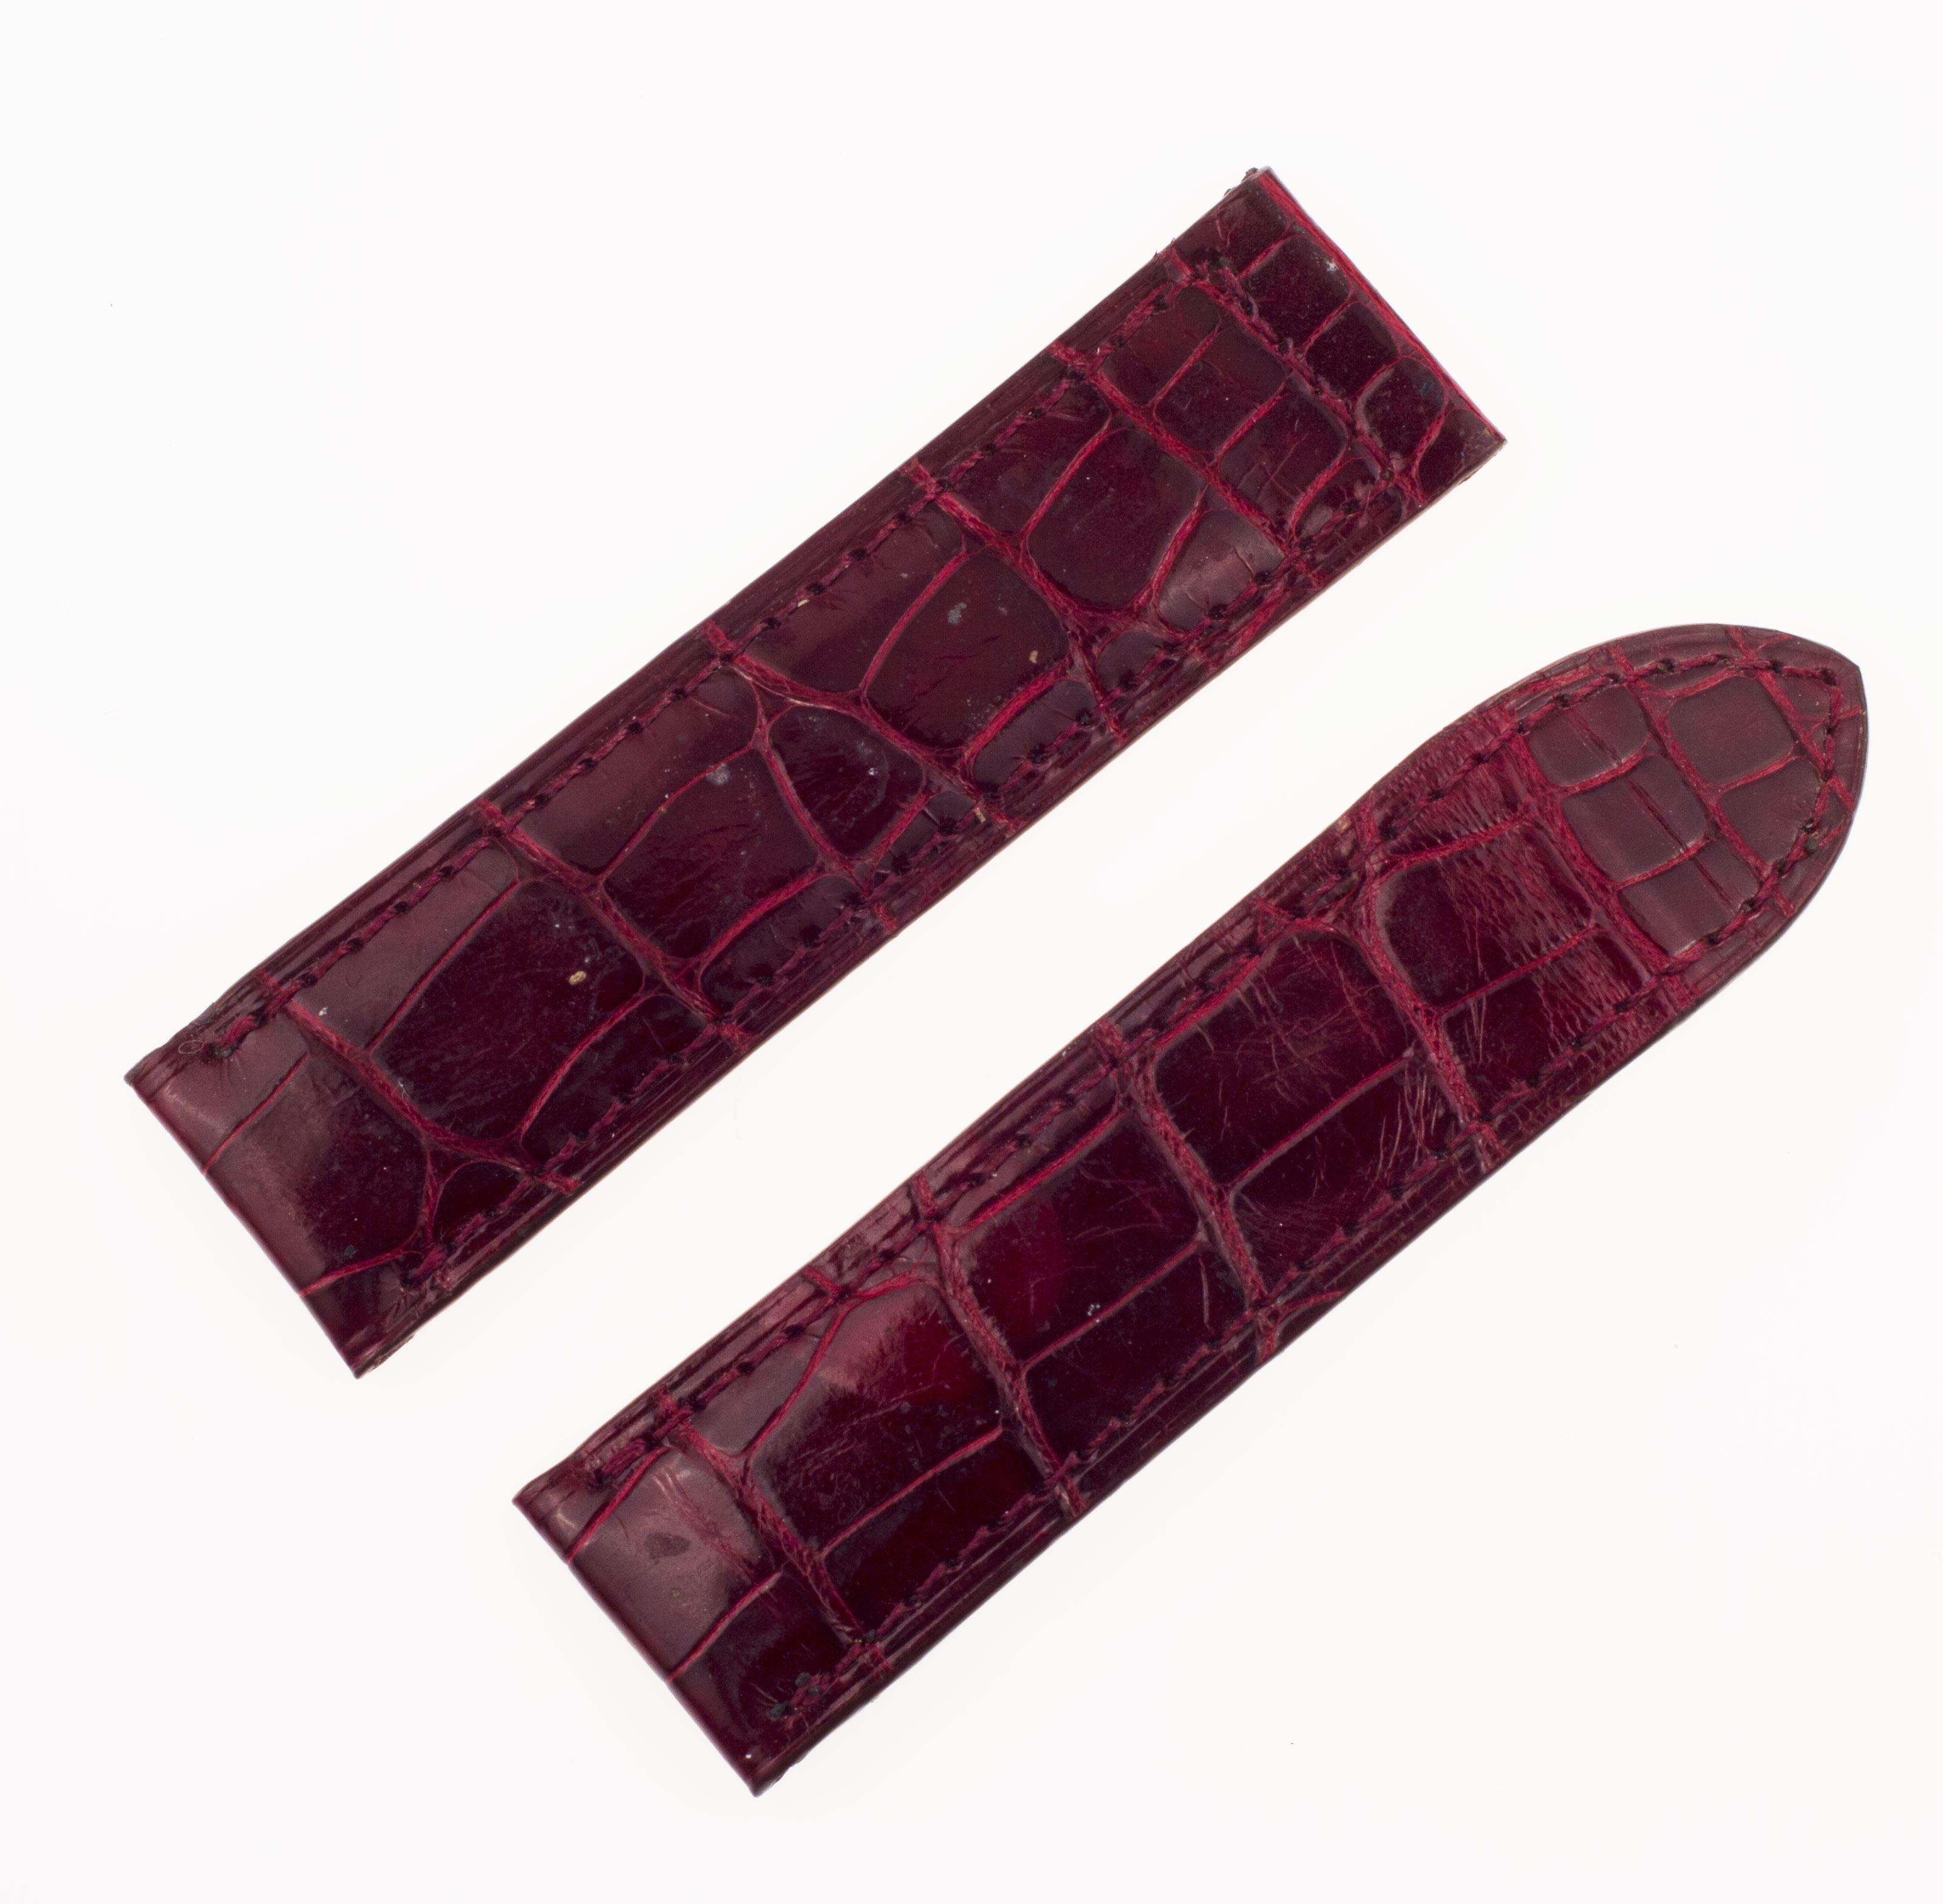 Cartier burgundy/bourdeaux alligator strap (18mm x 18mm)